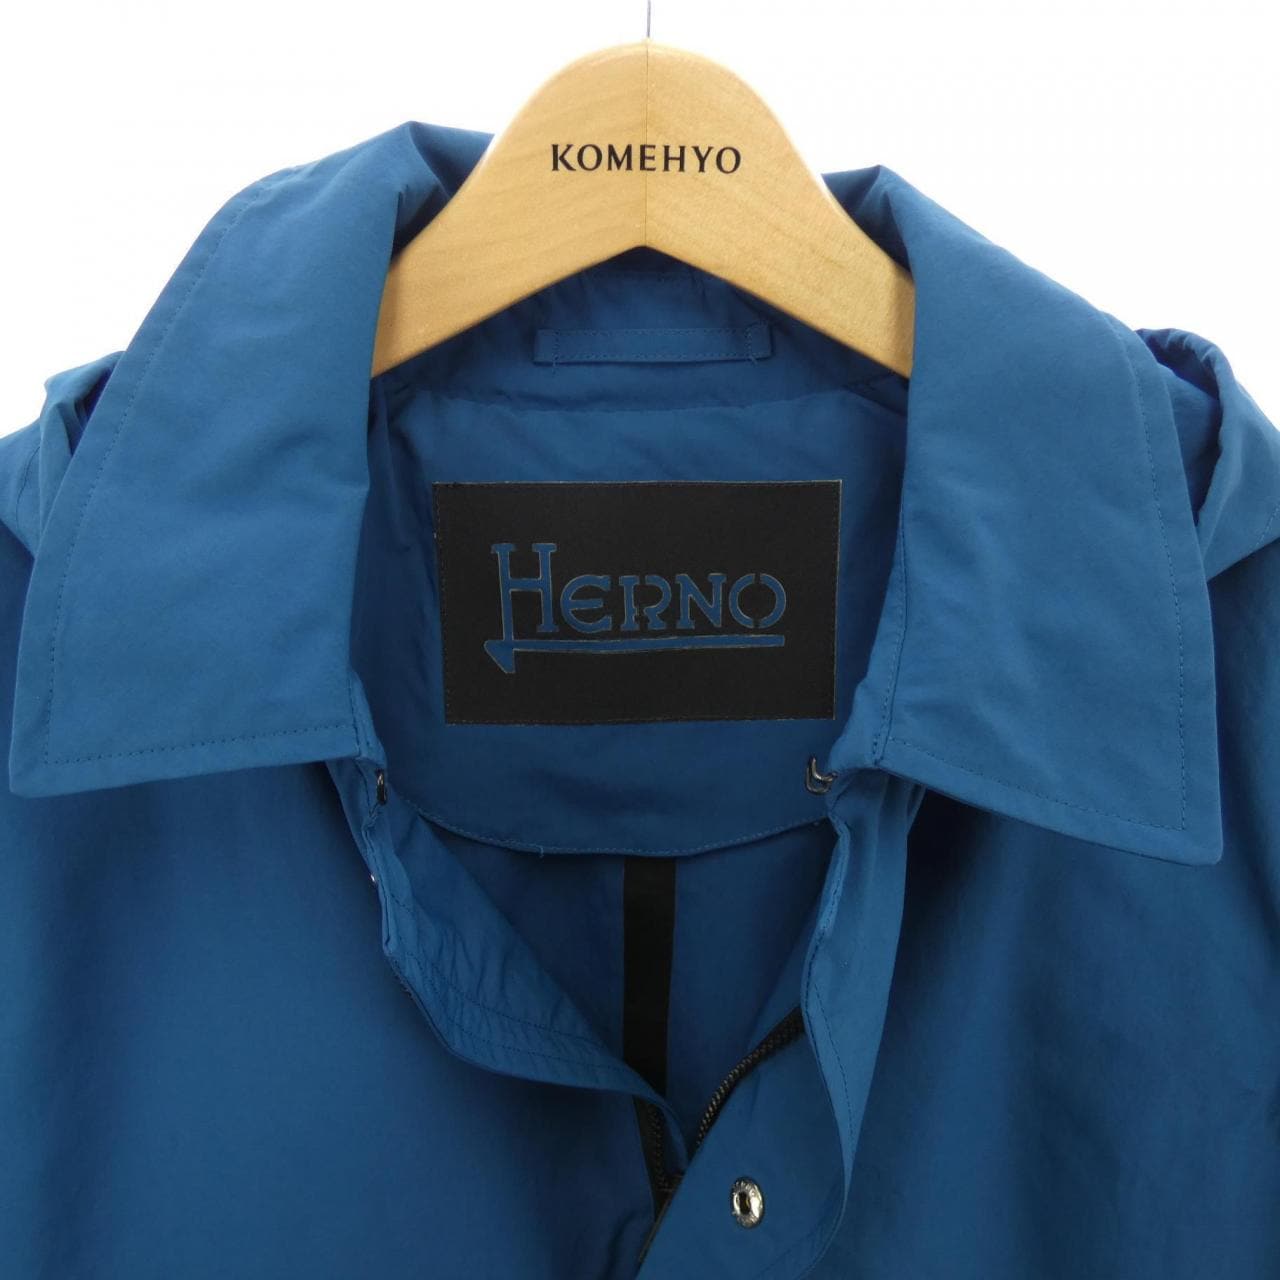 Herno coat